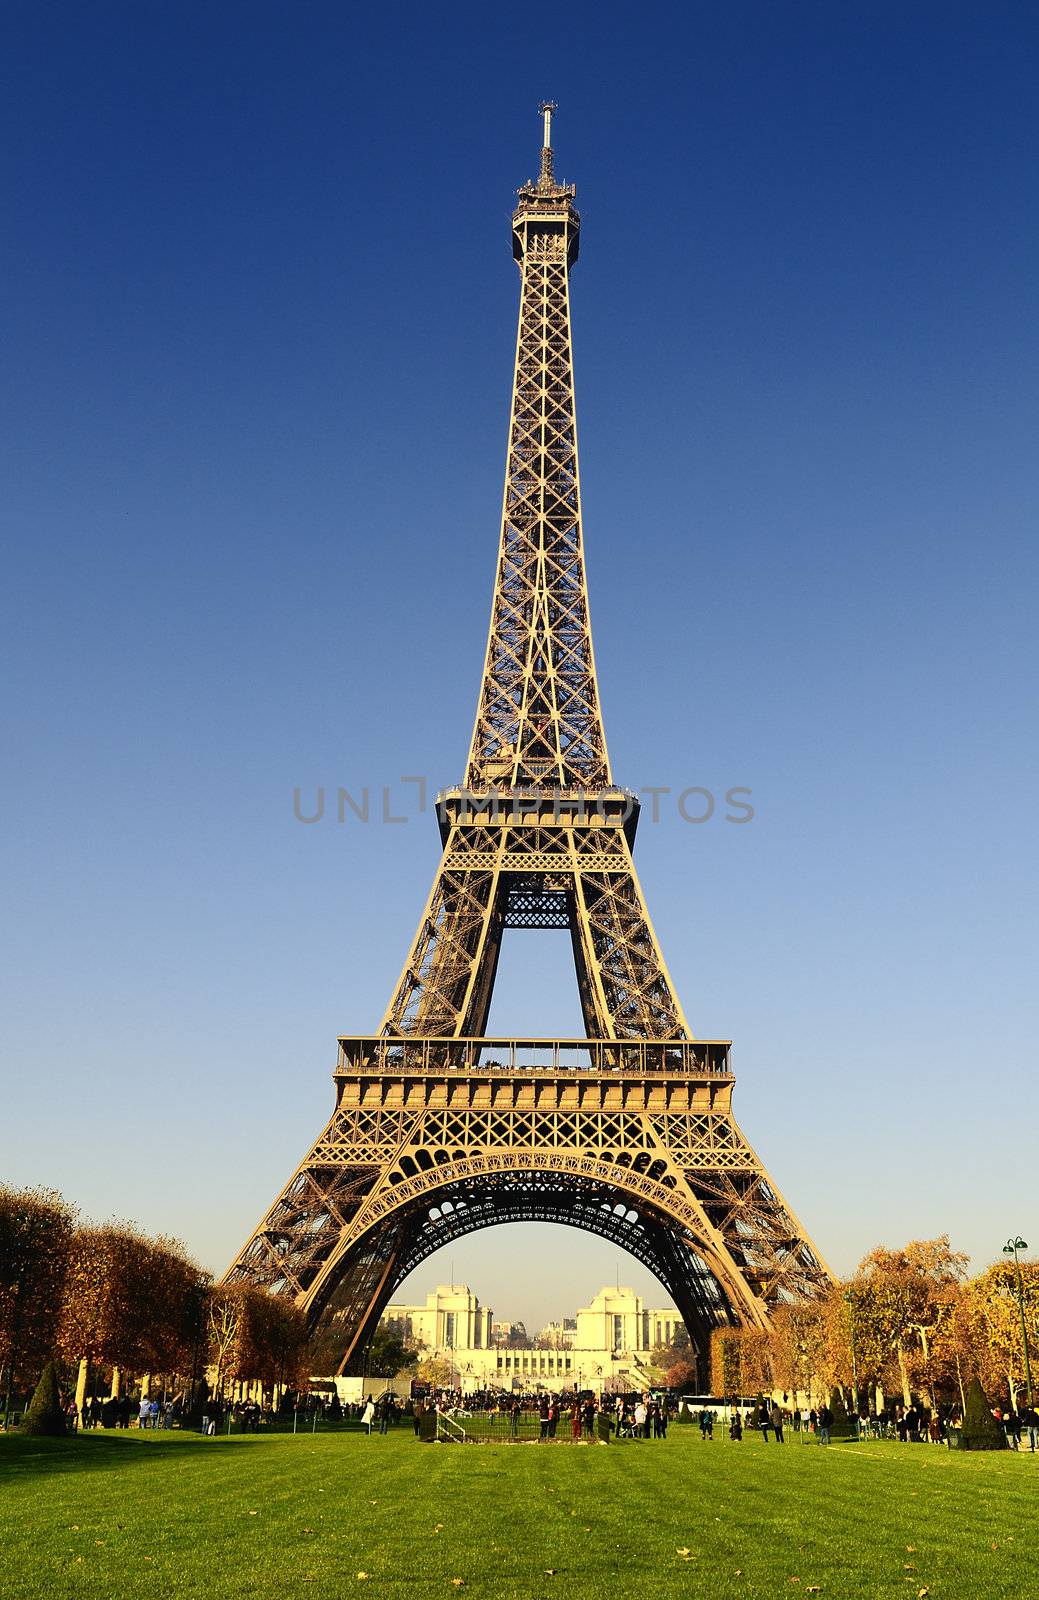 The Eiffel Tower by ventdusud